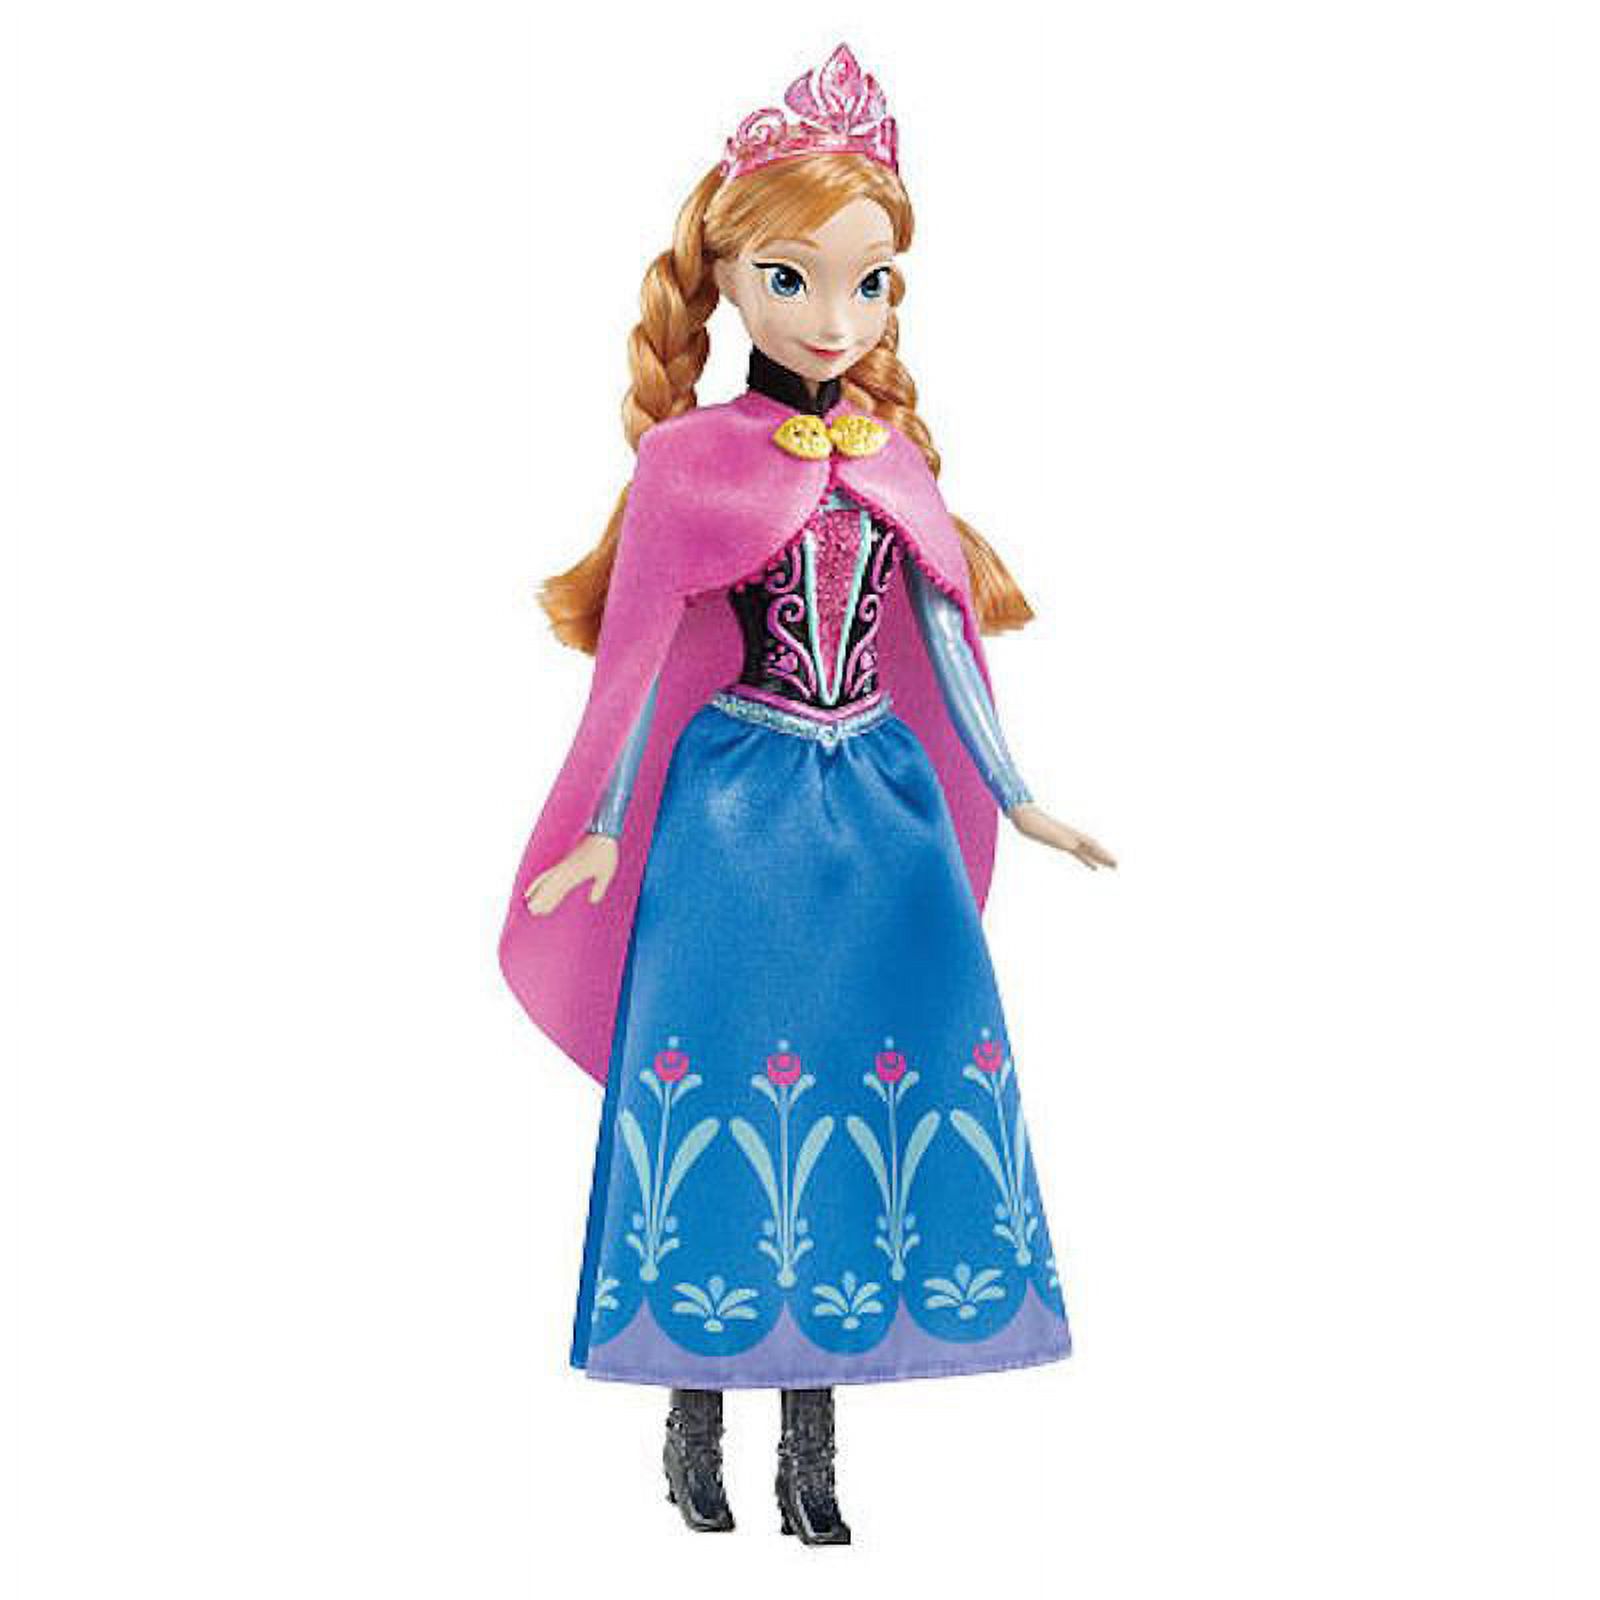 Disney Frozen Sparkle Anna Doll - image 4 of 4